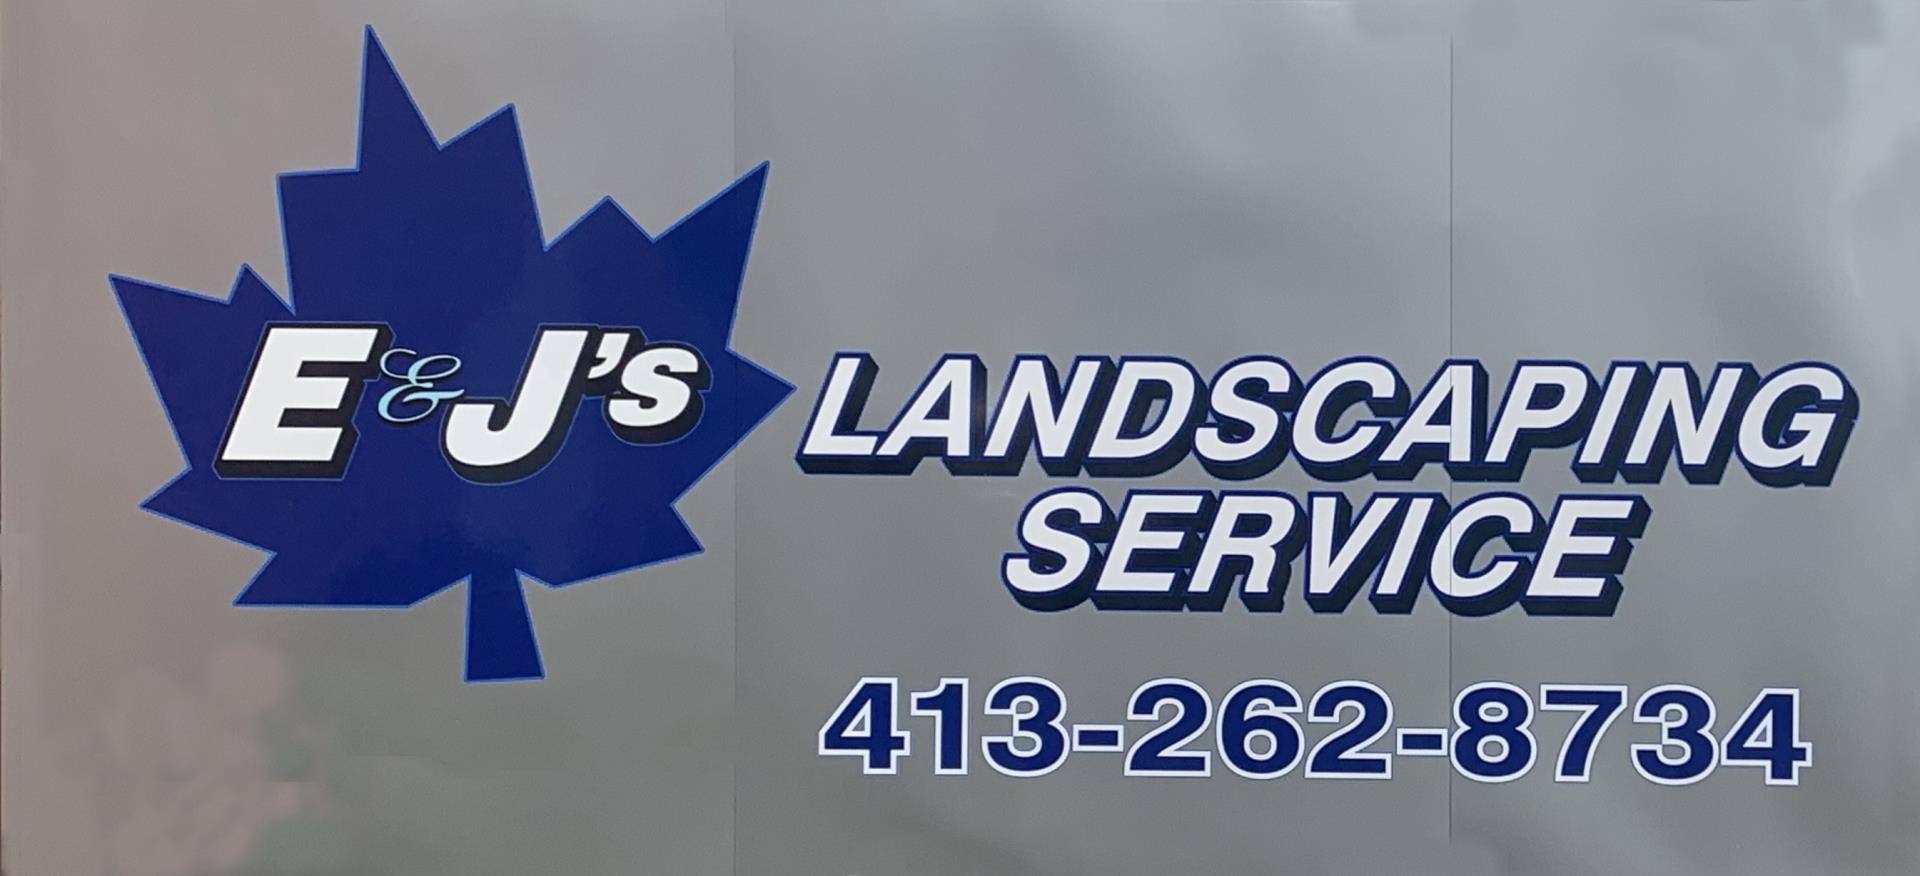 E&J's Landscaping Service logo